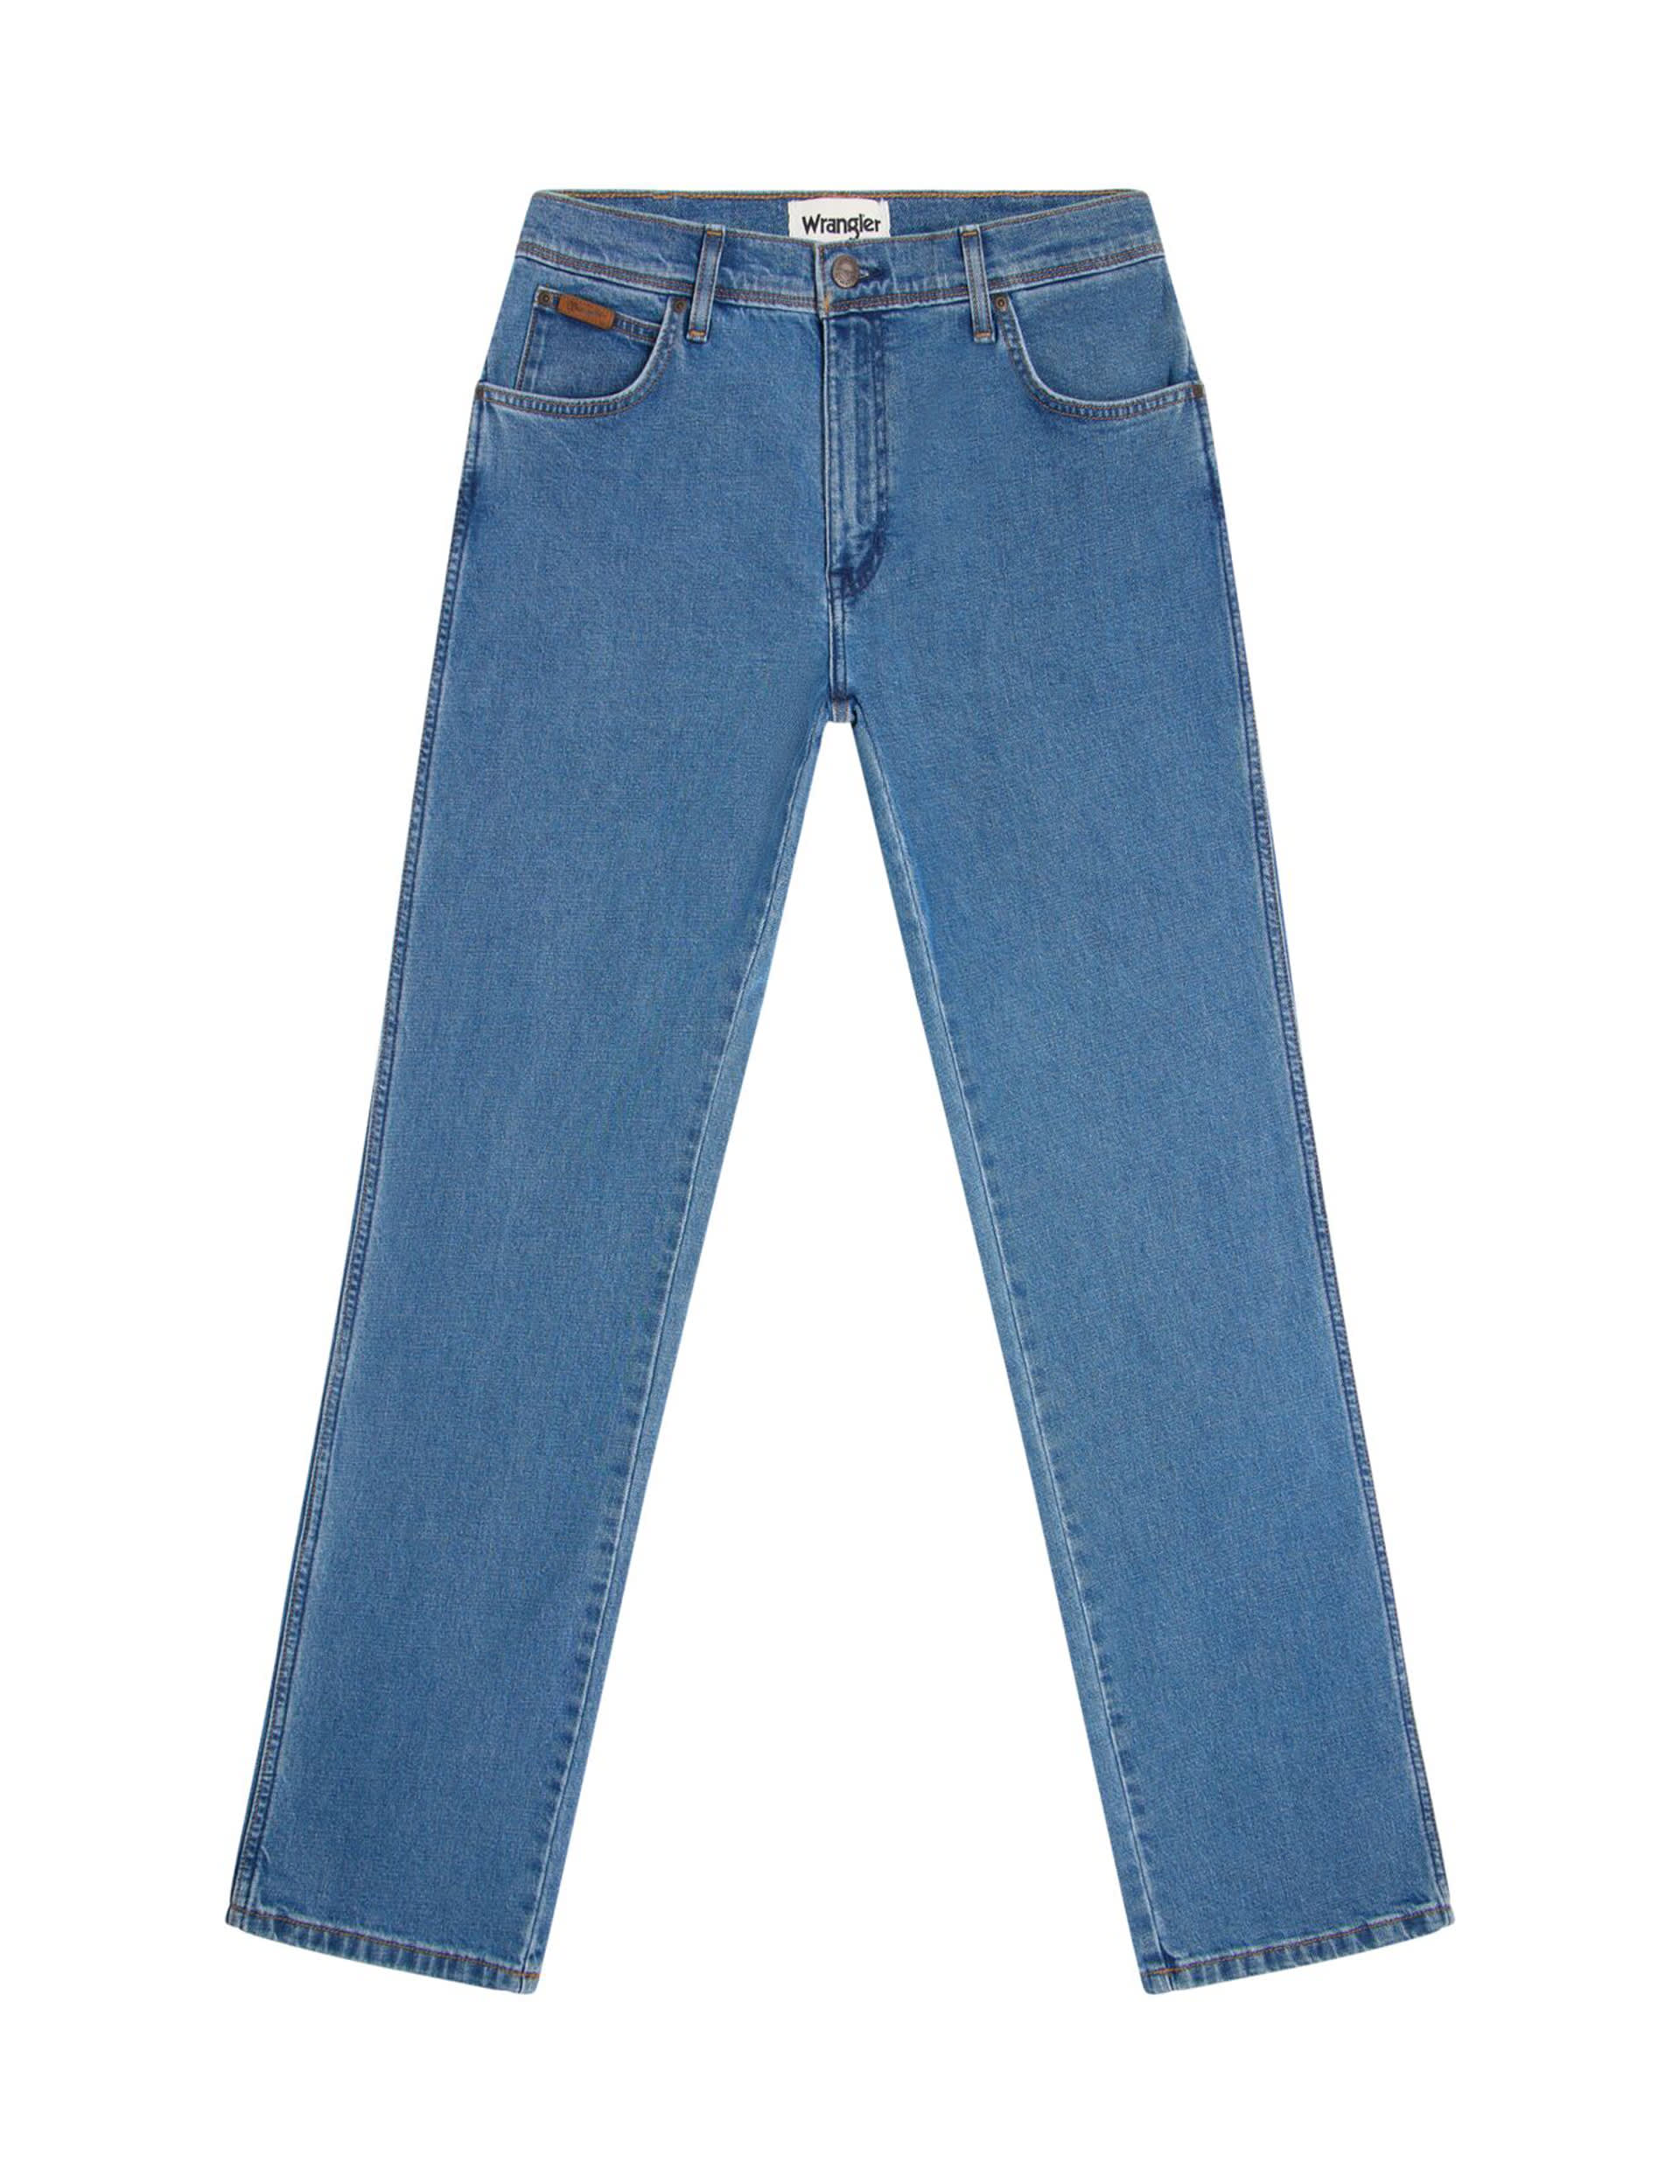 Cotton Rich Regular Fit 5 Pocket Jeans